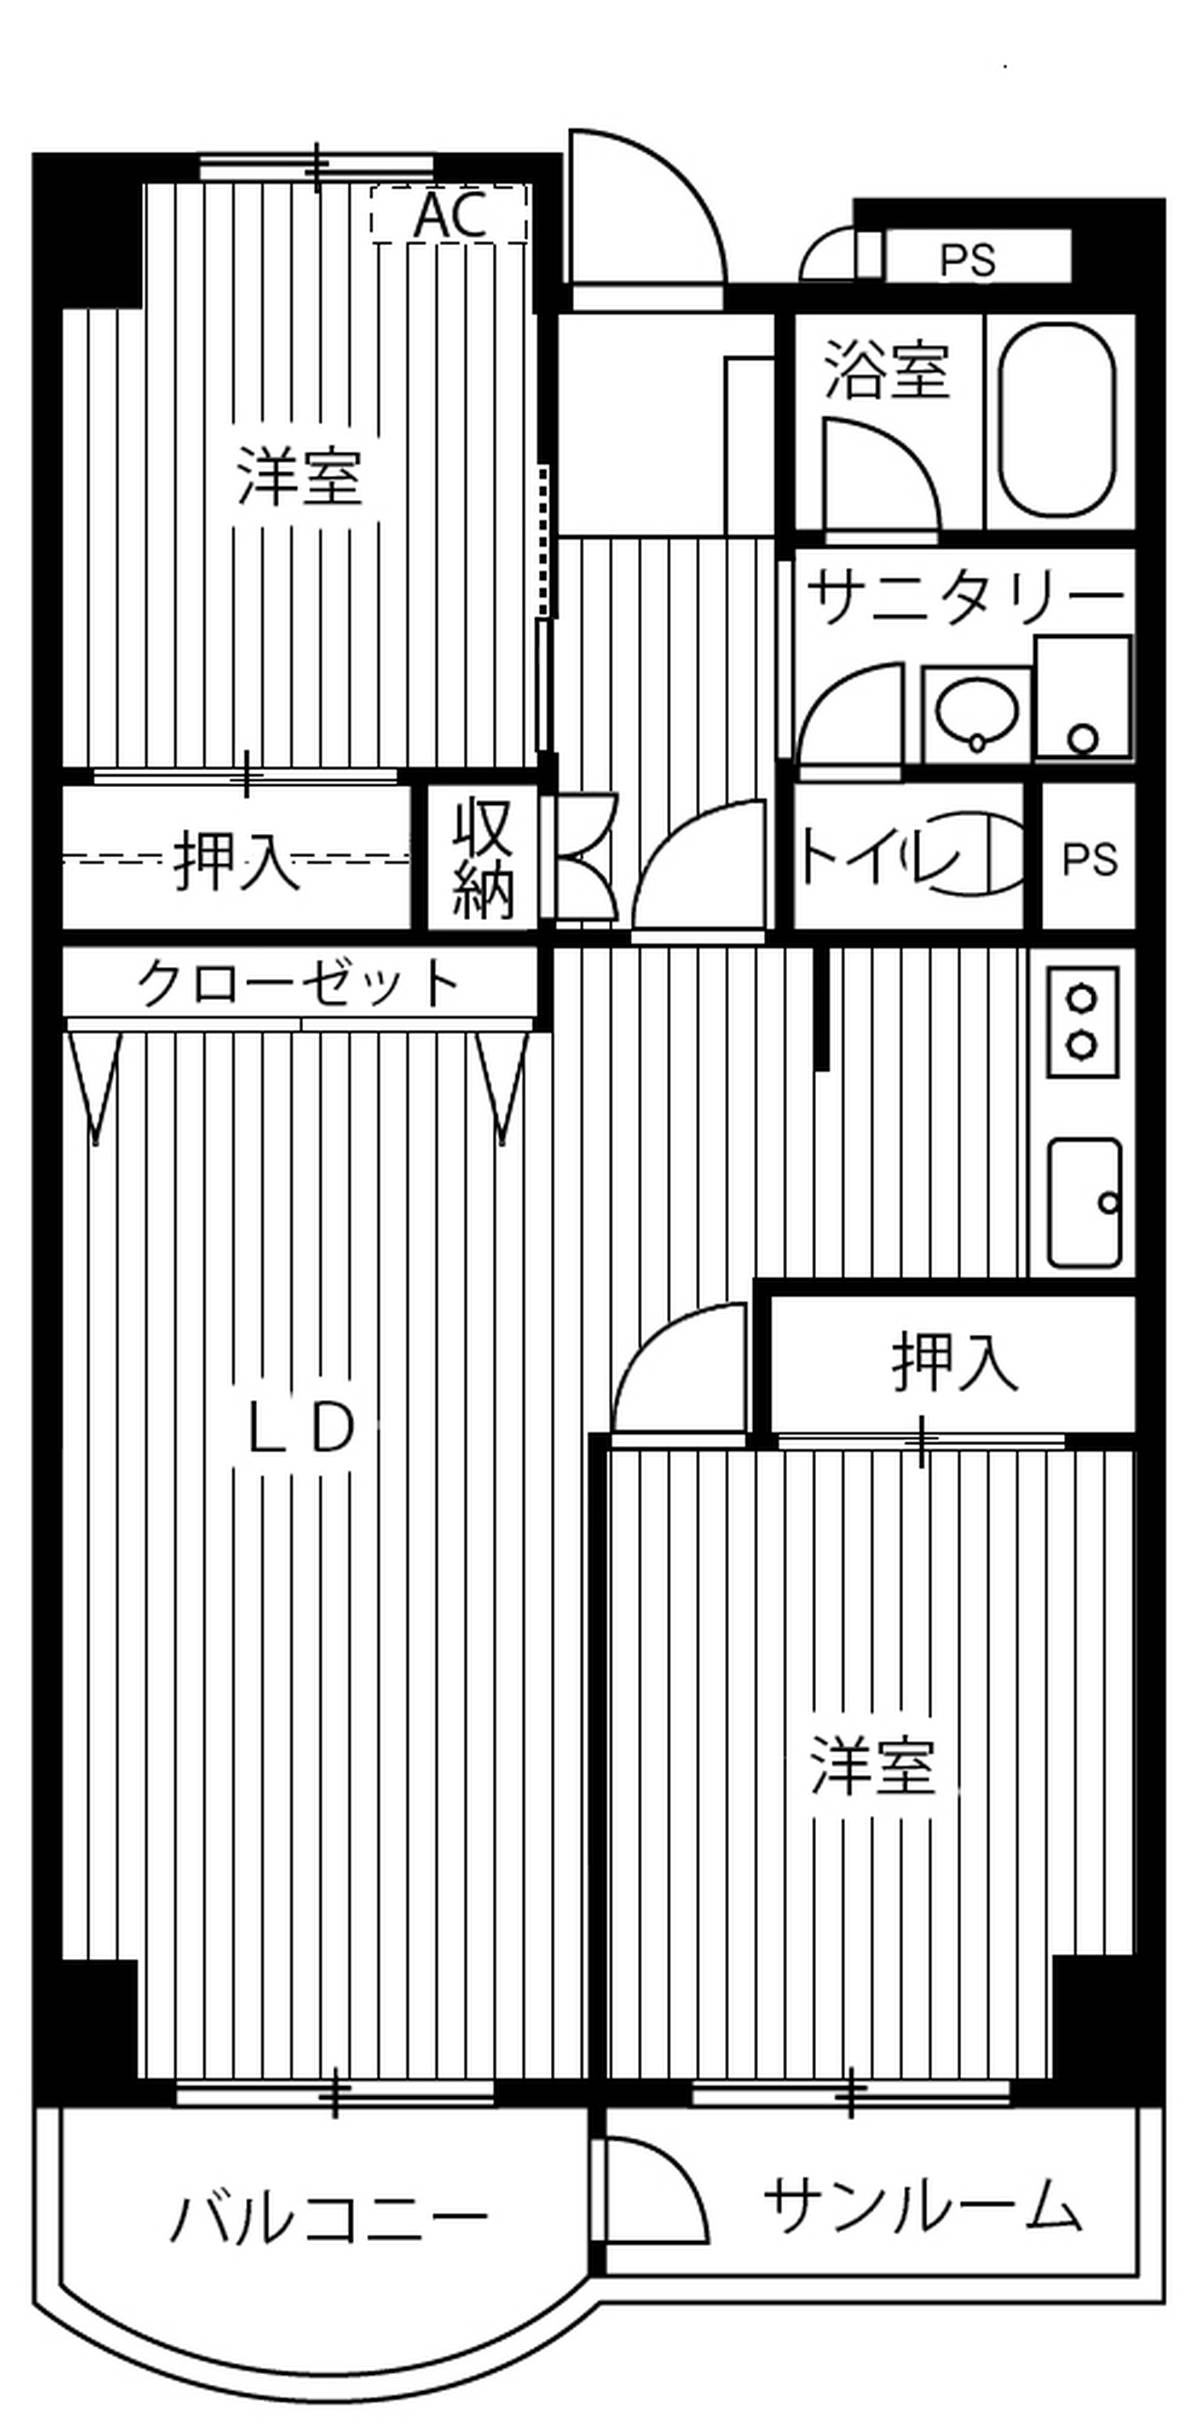 Sơ đồ phòng 2LDK của Village House Kanazawa Tower ở Kanazawa-shi